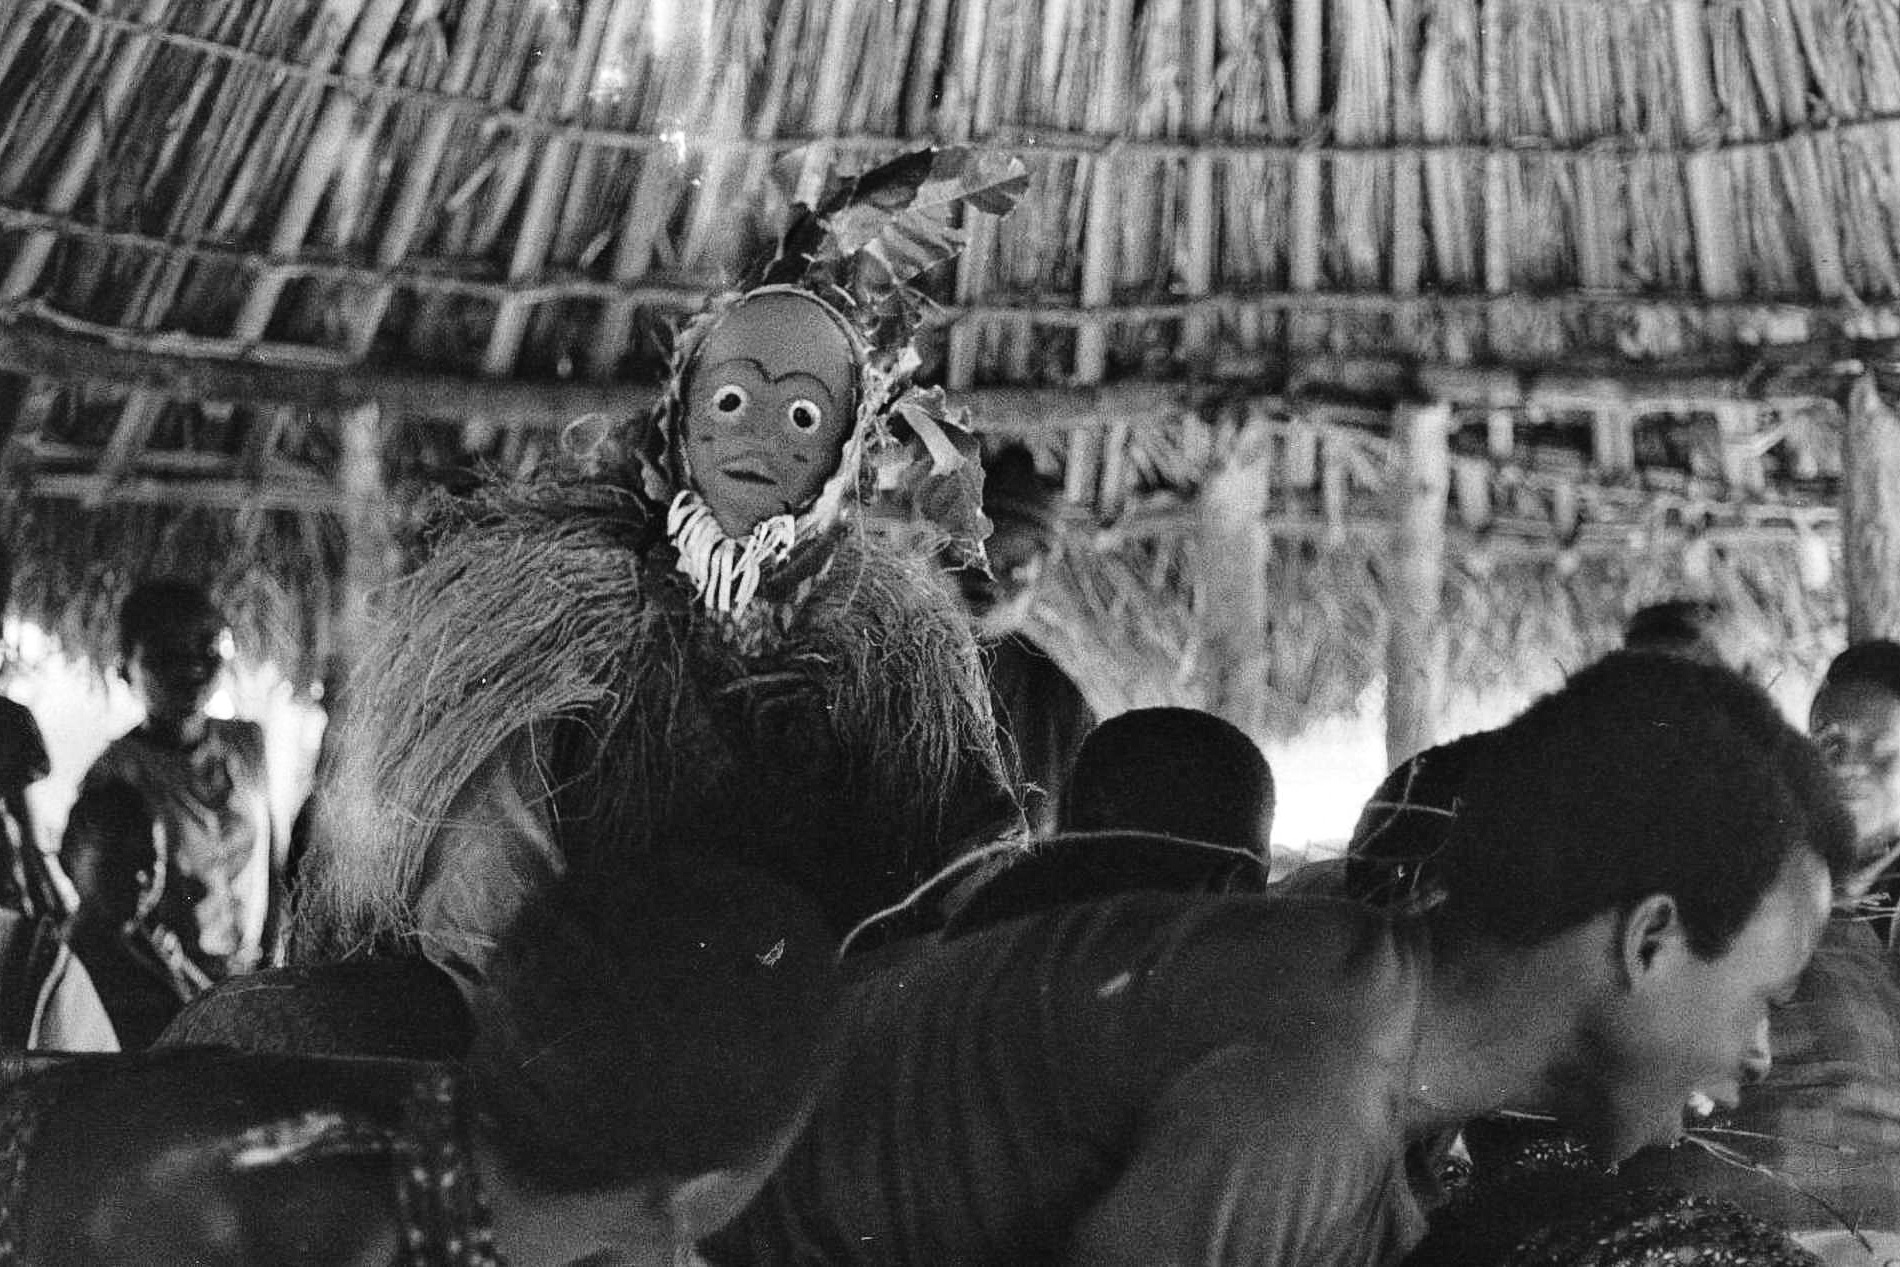 Dan2-Inspection of a zakpei ge mask, to prevent against fires. Côte d’Ivoire, village of Gbapolule. © Eberhard Fischer